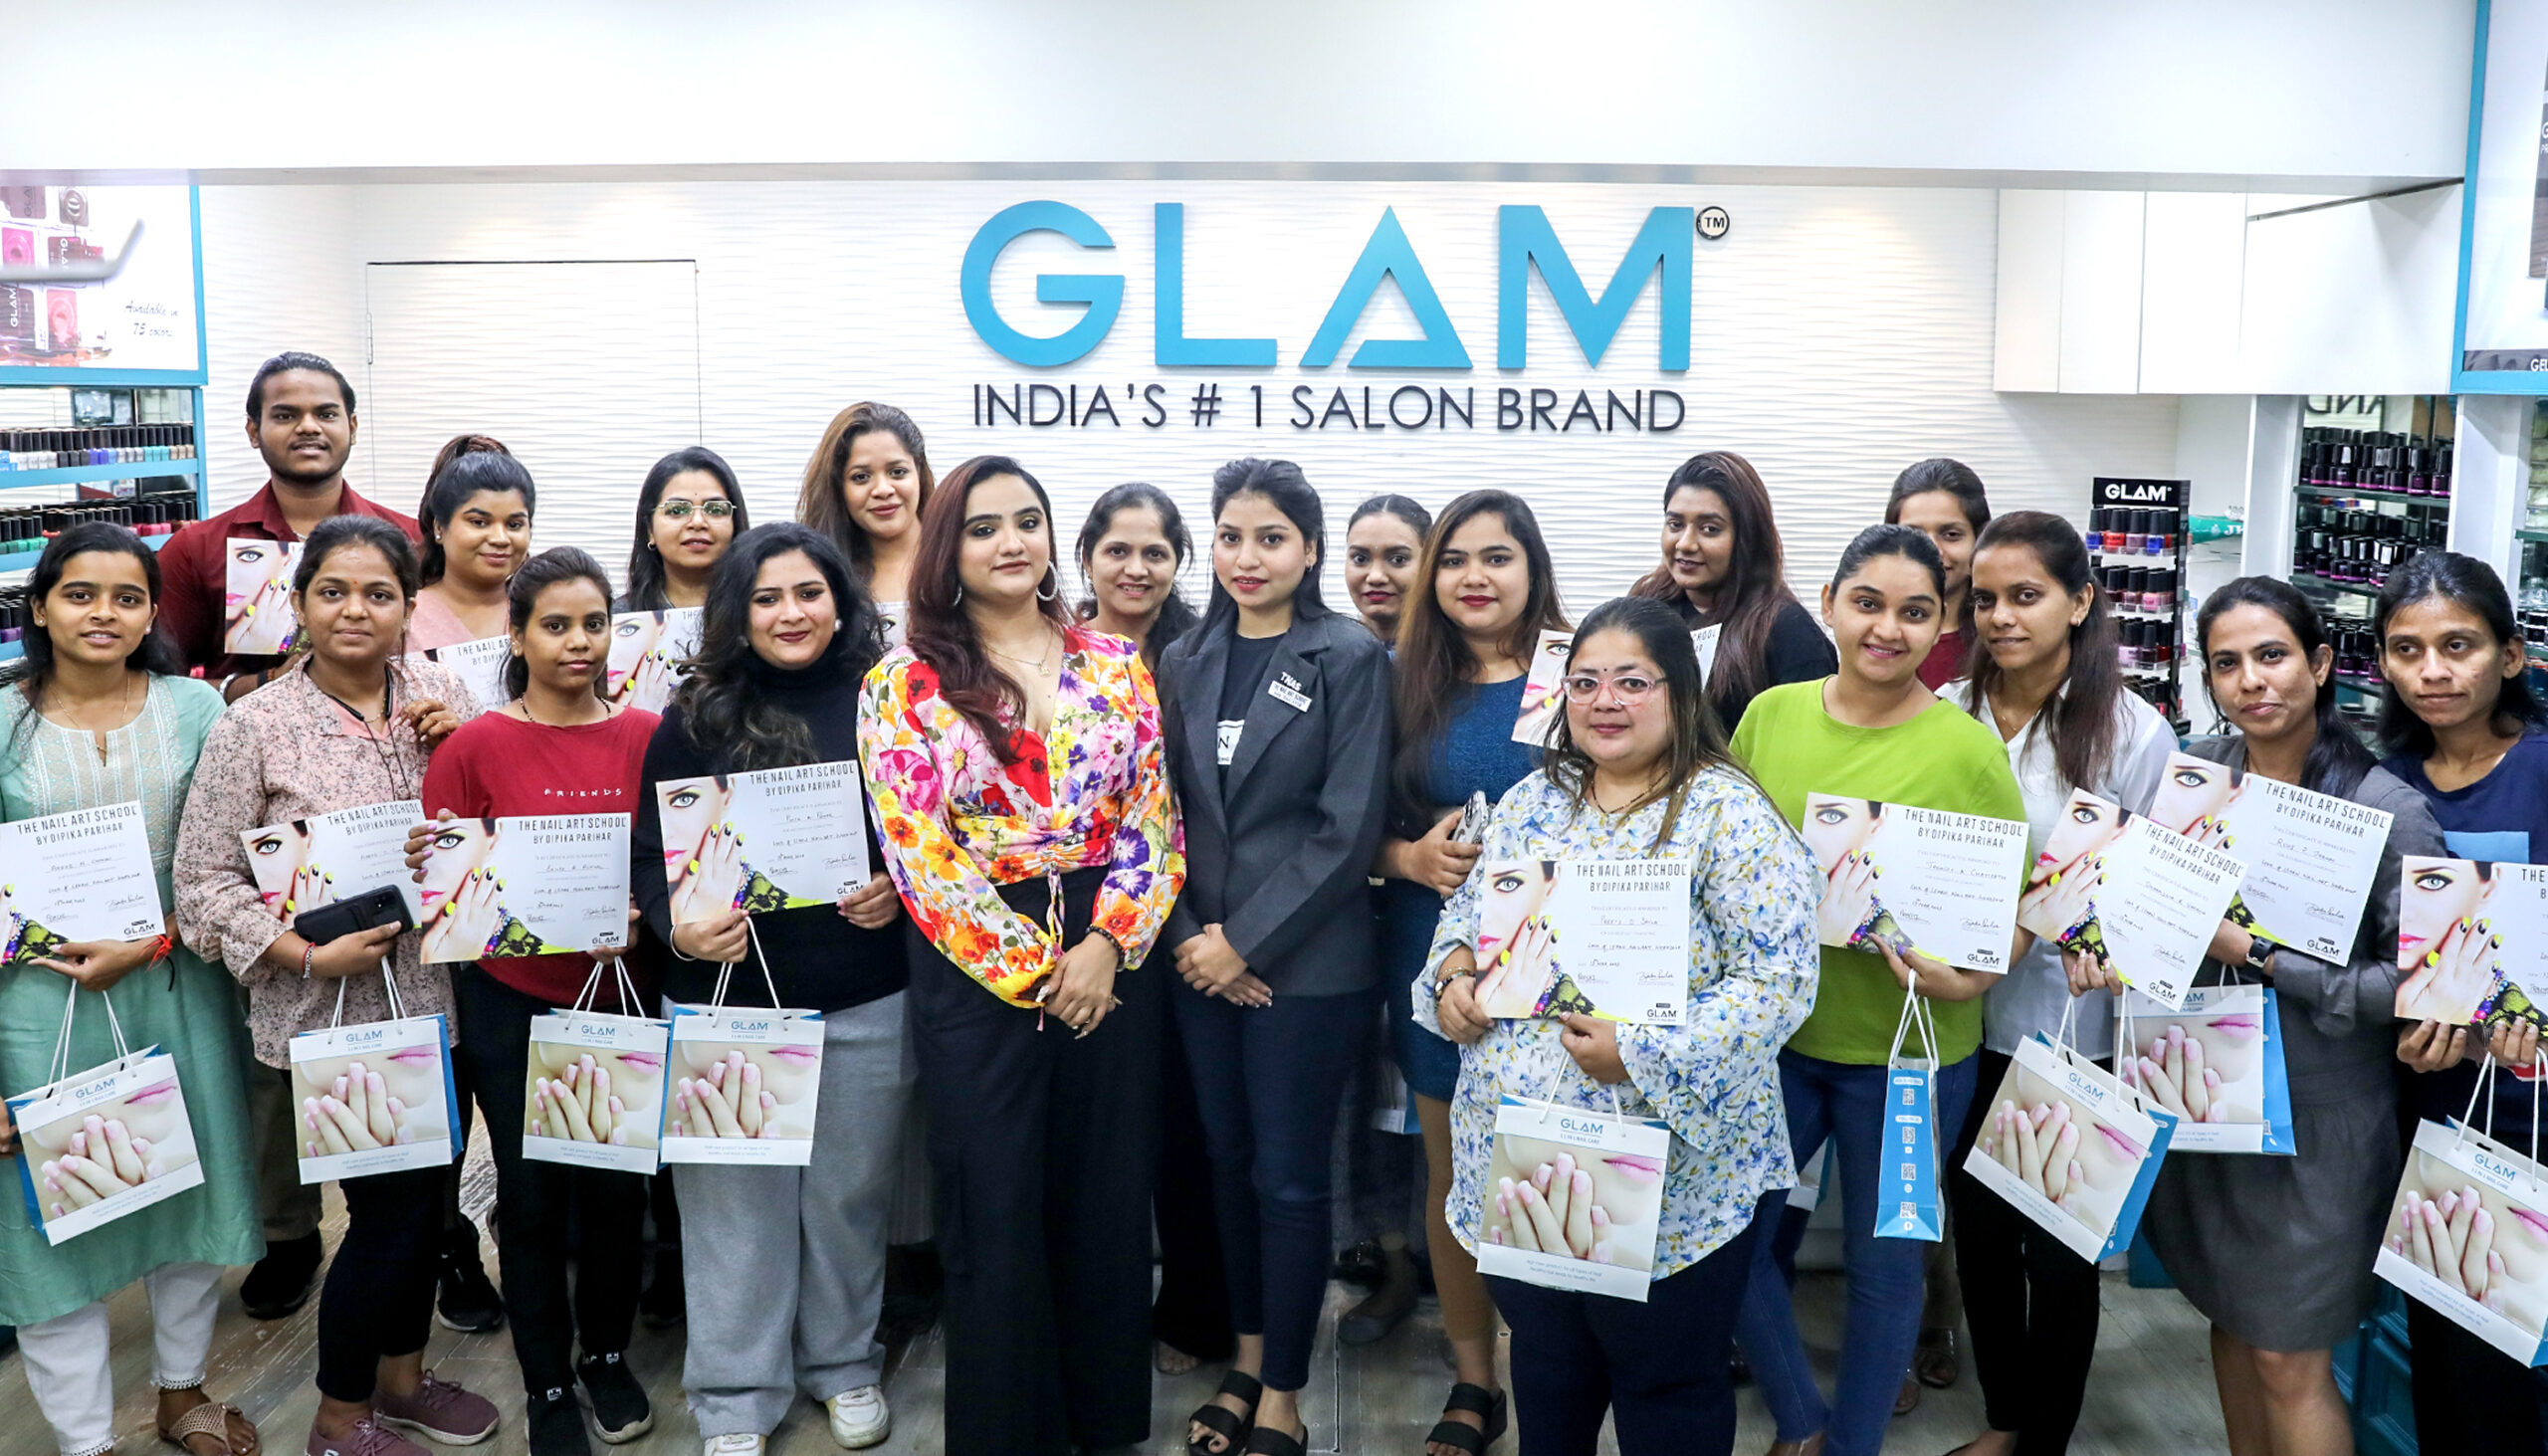 Nail Art Enthusiasts Rejoice! The GLAM Day Celebration at The Nail Art School Mumbai was a Smashing Success!